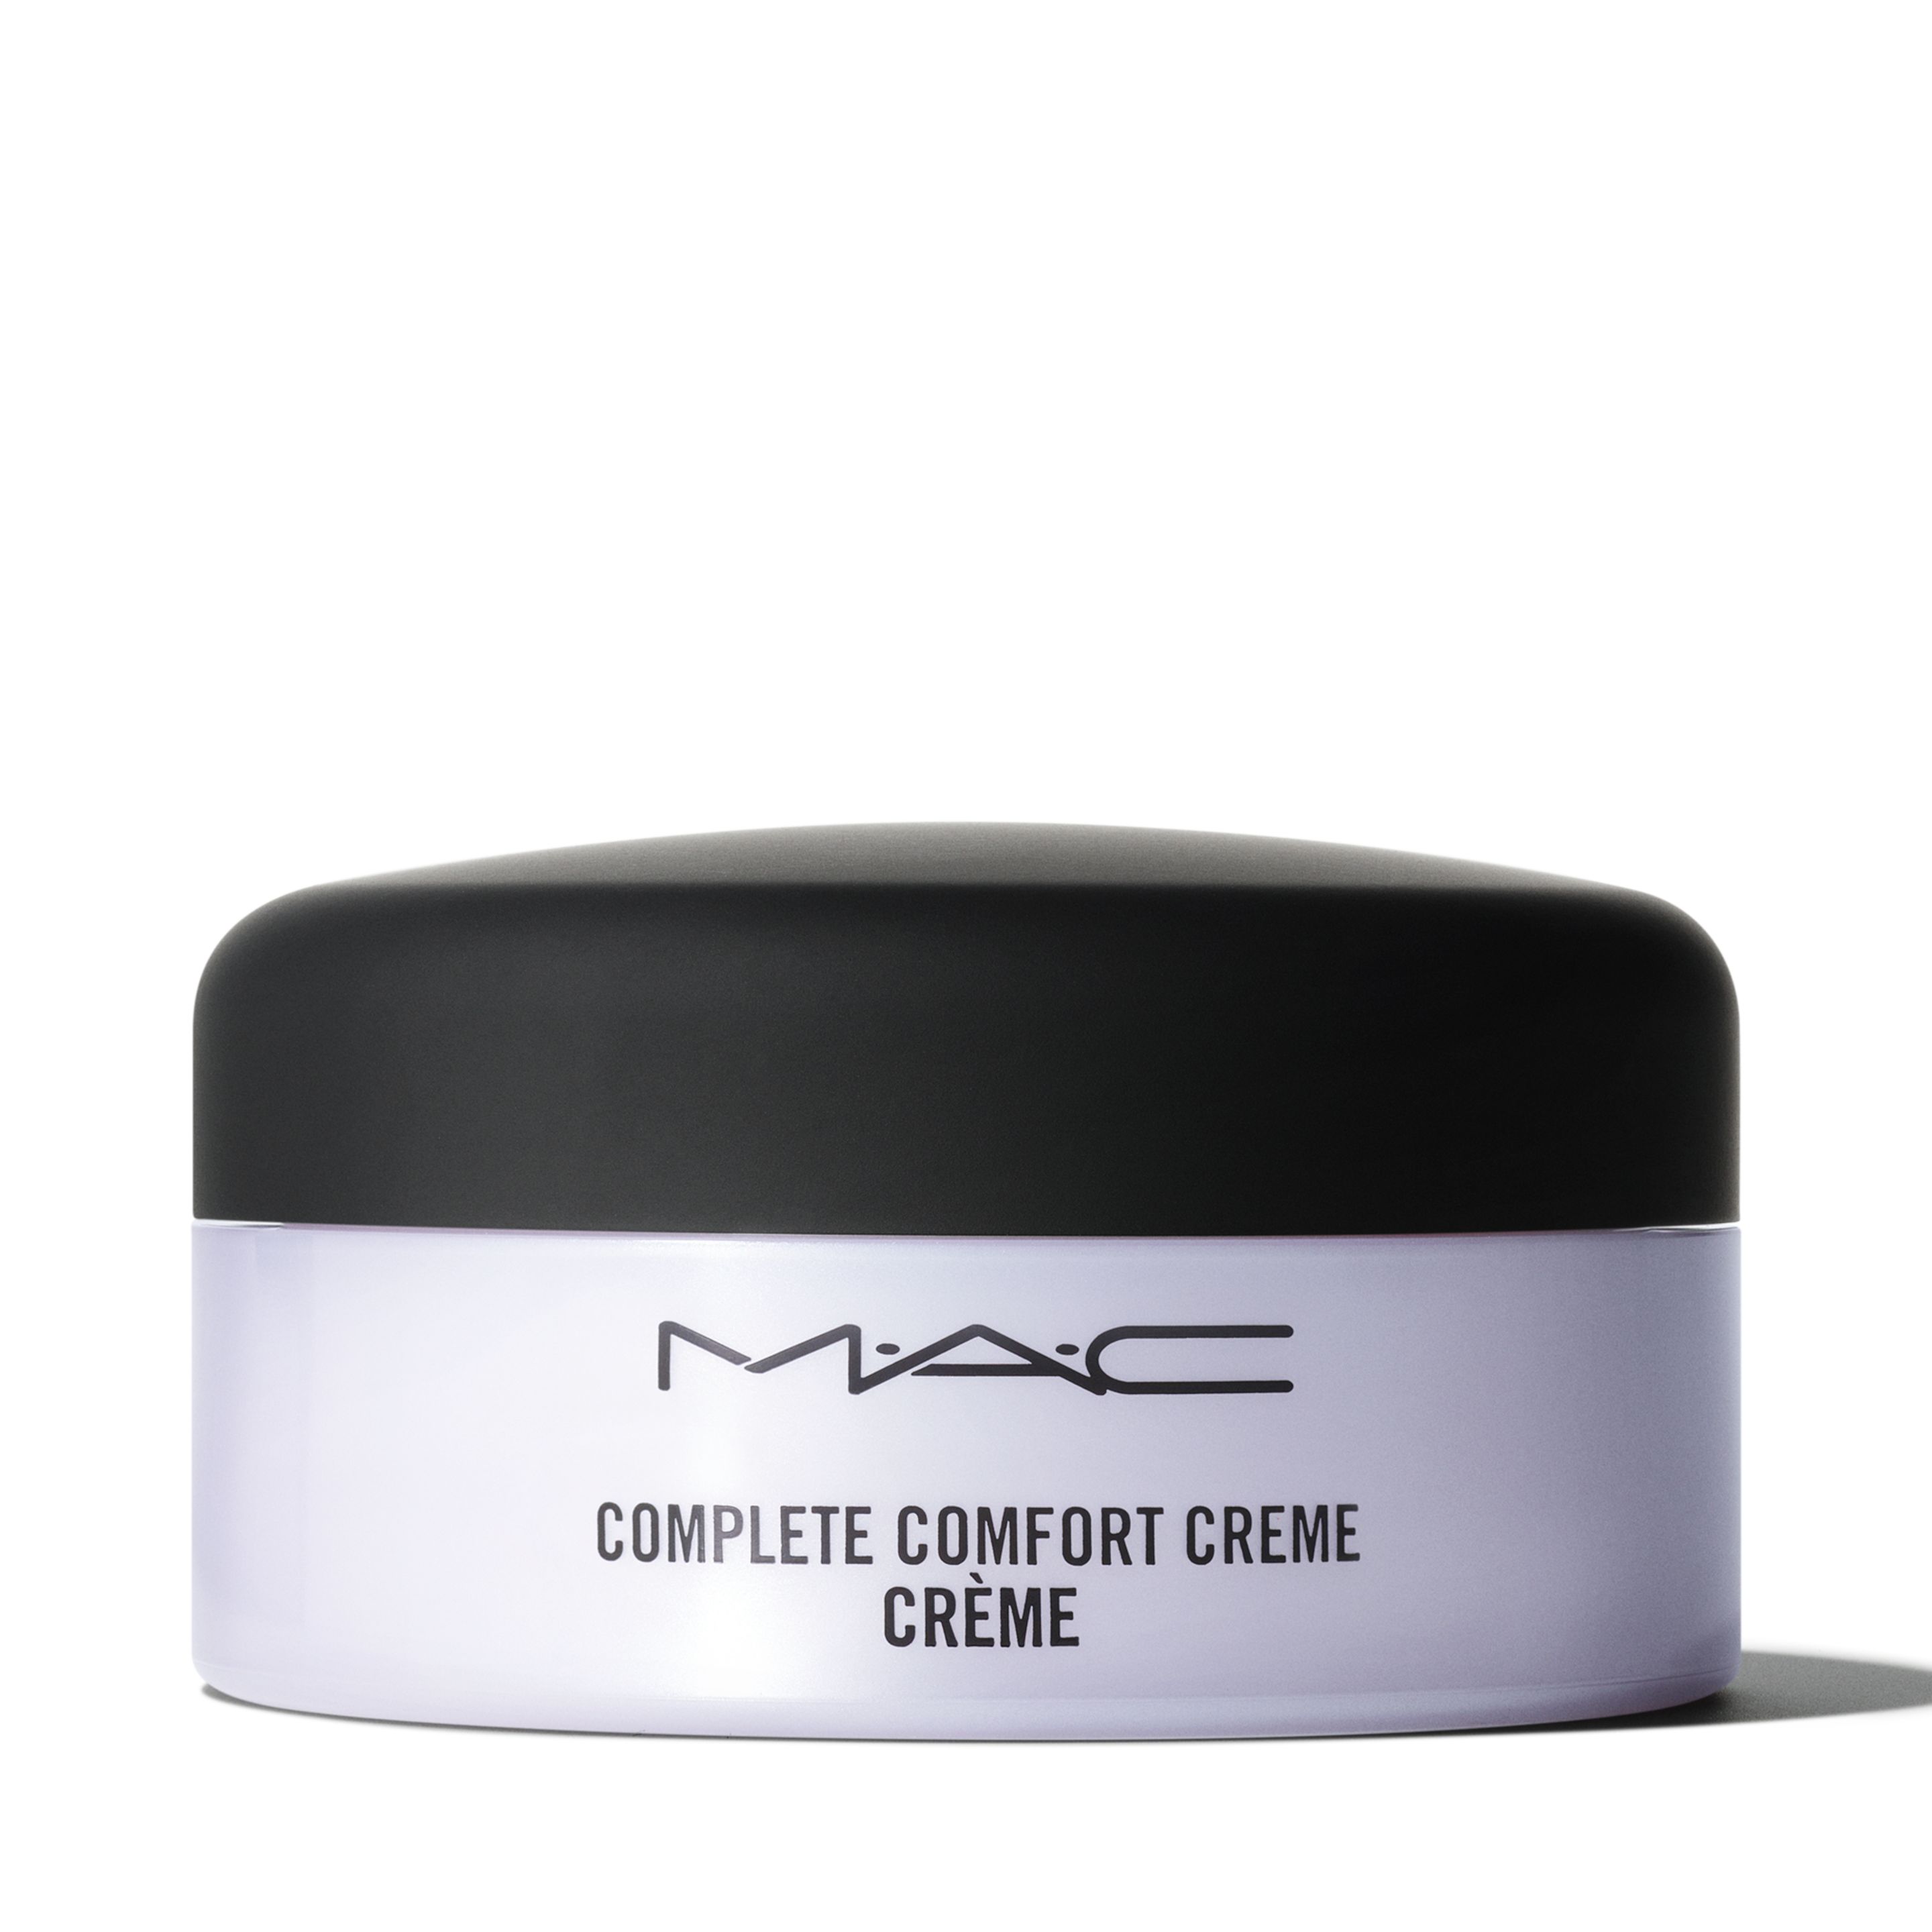 Крем для лица MAC Cosmetics Complete Comfort Creme глубокоувлажняющий, 50 мл eisenberg успокаивающий восстанавливающий крем для лица и области вокруг глаз creme apaisante reparatrice